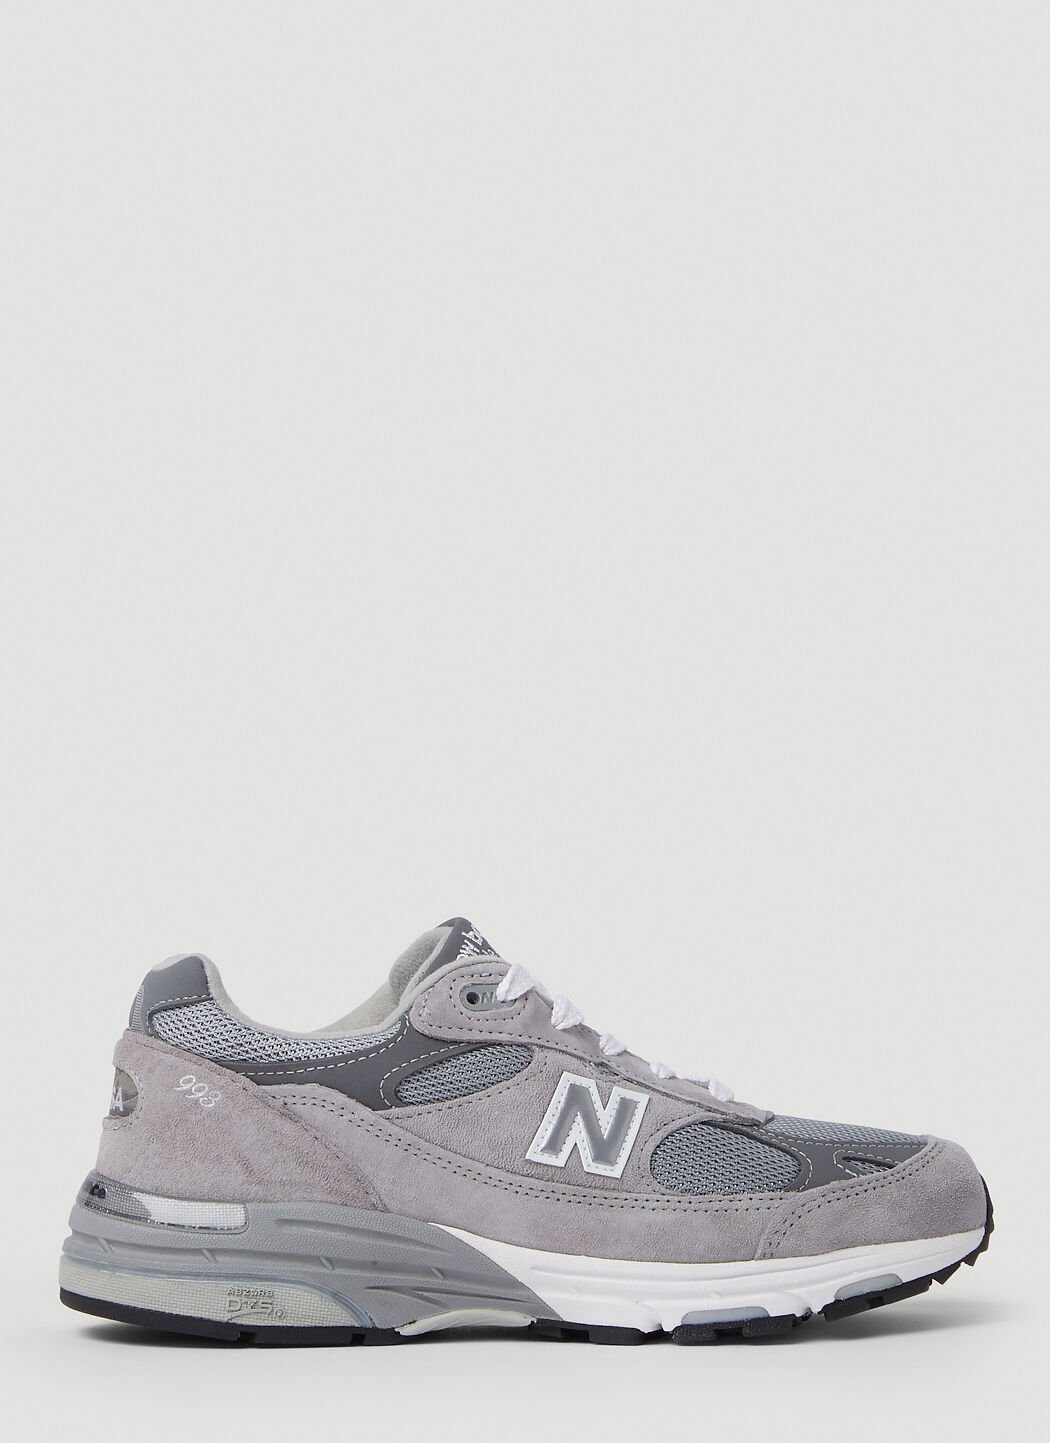 New Balance 993 运动鞋 灰色 new0254004